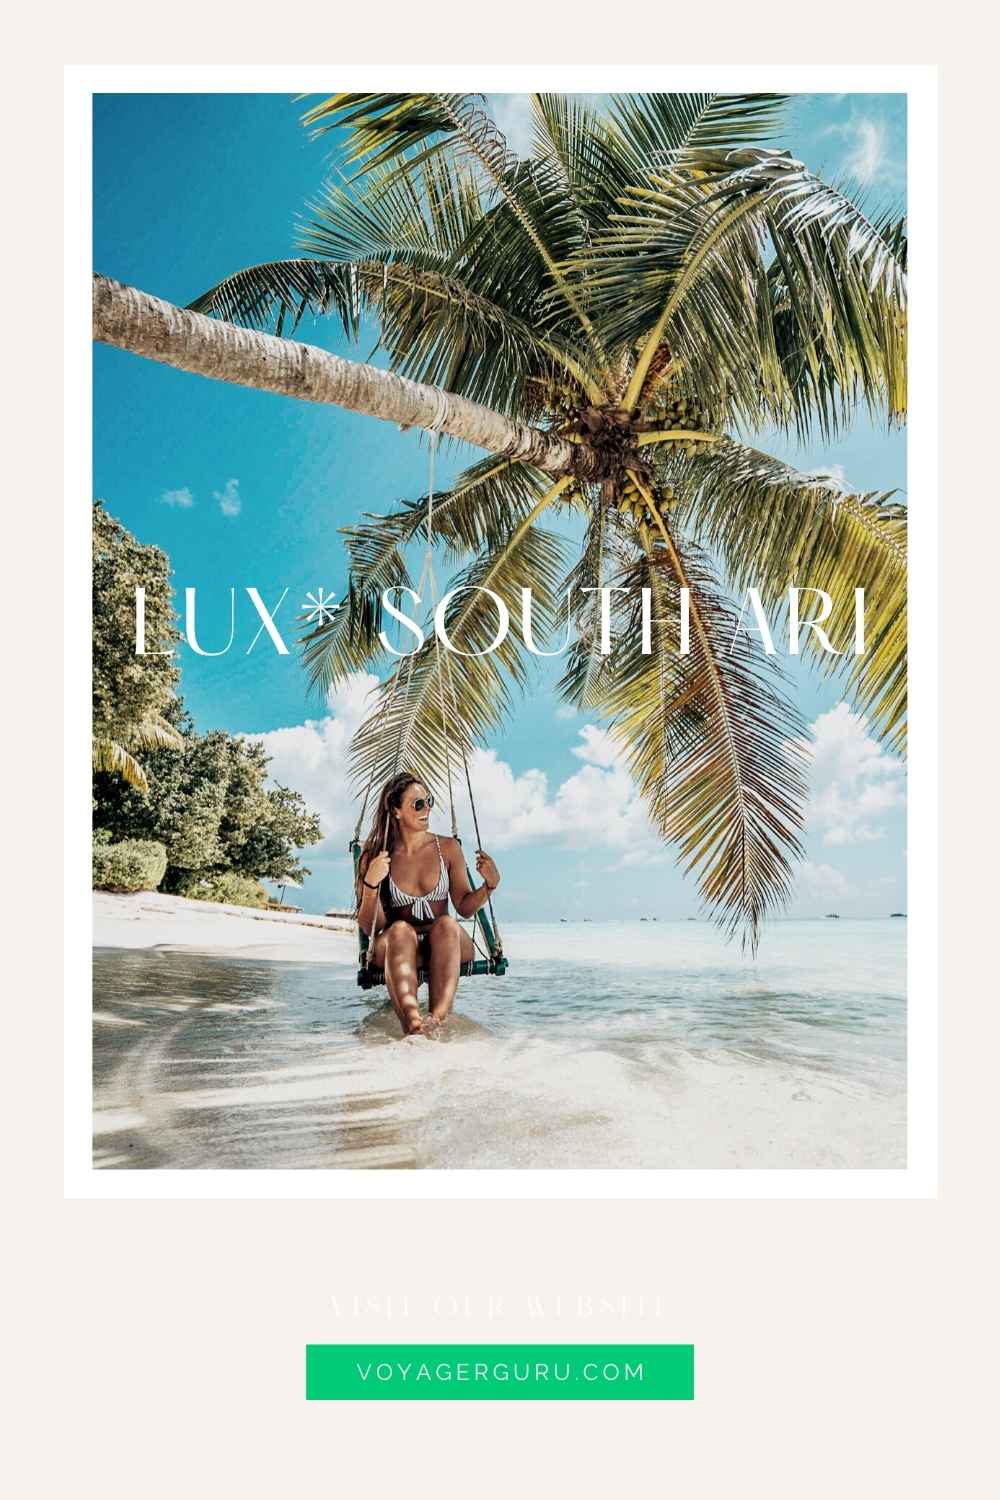 lux south ari maldives hotel review pin 4